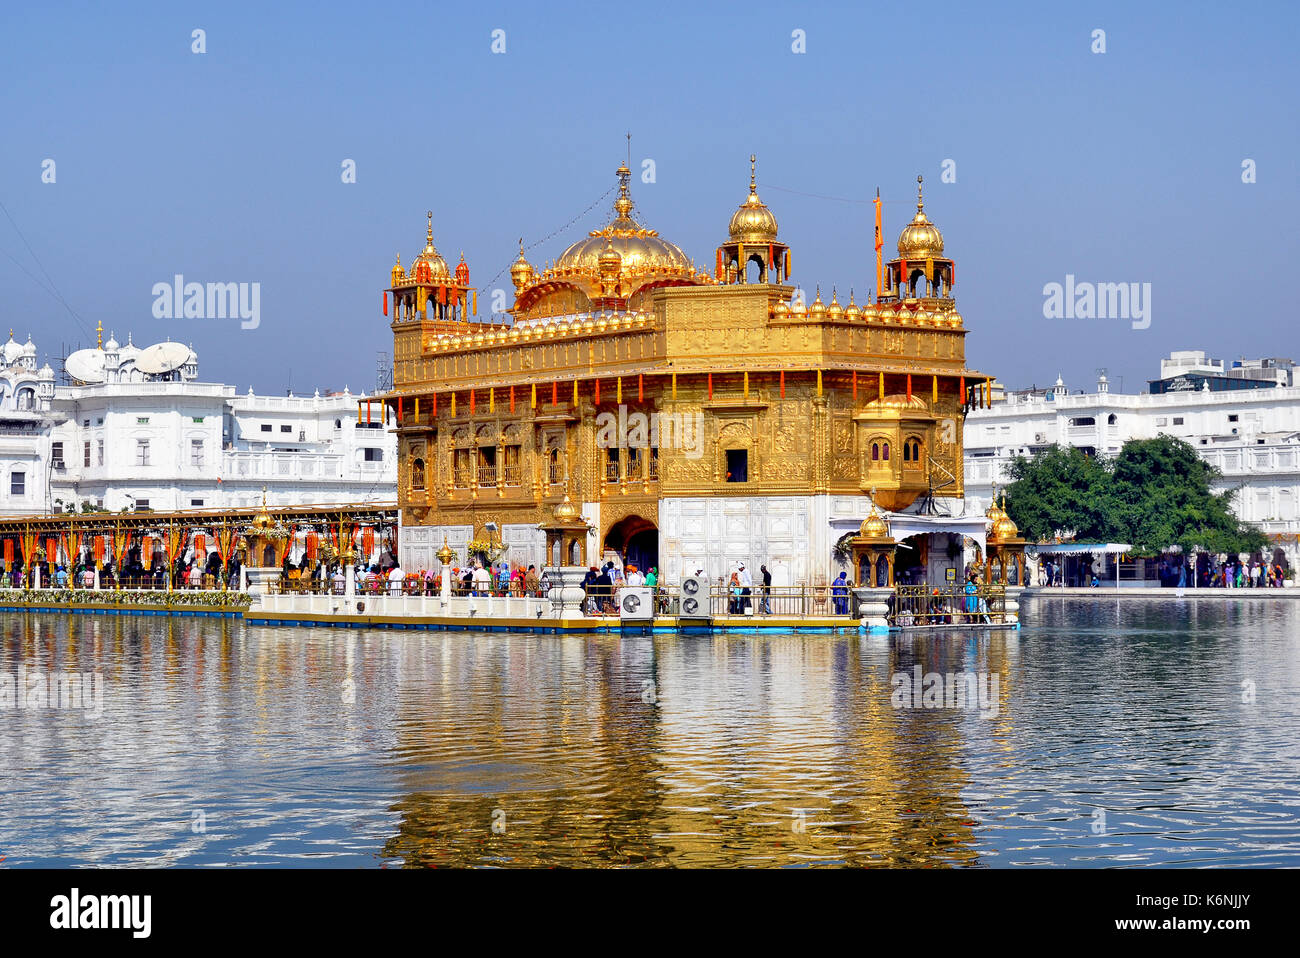 AMRITSAR, INDIA - 30 OCTOBER 2015: Golden Temple (Harmandir Sahib) in Amritsar, Punjab, India, the holiest Sikh gurdwara in the world. Stock Photo